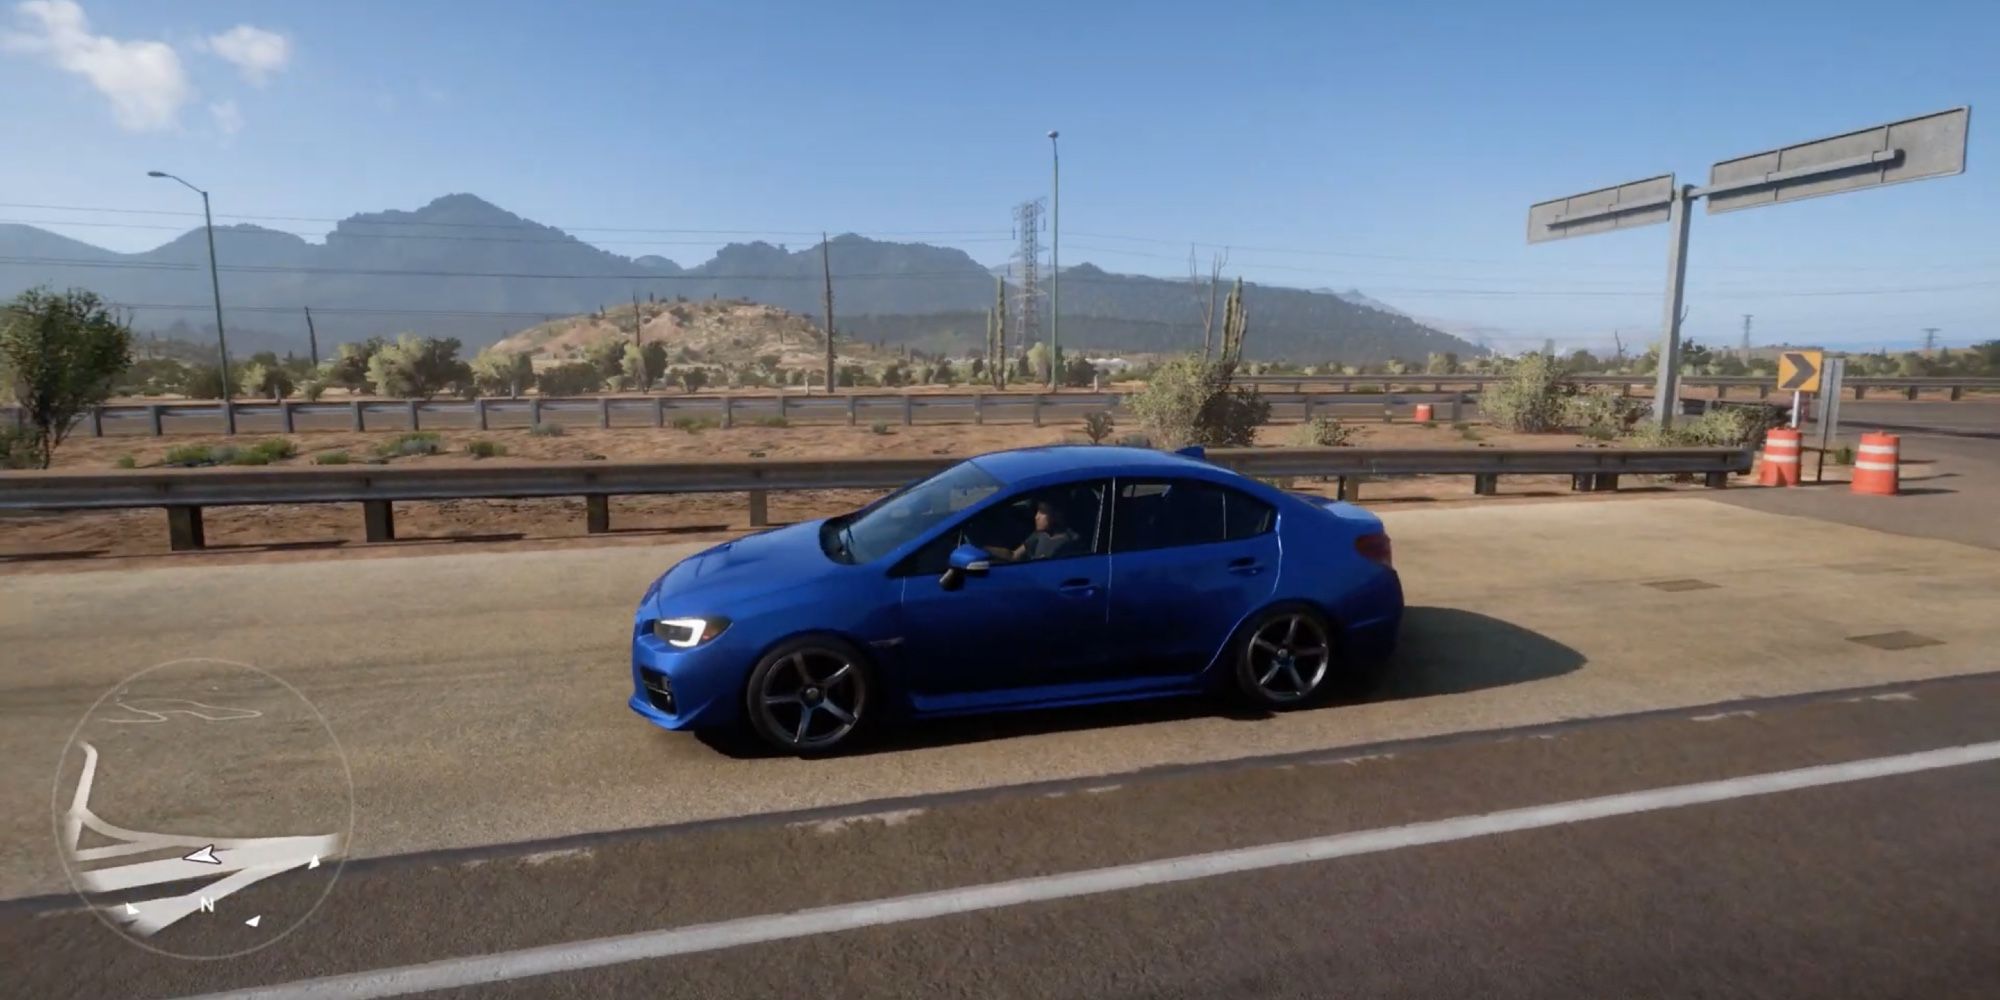 Forza Horizon 5 - Subaru WRX STI - Player drives car alongside the mountains